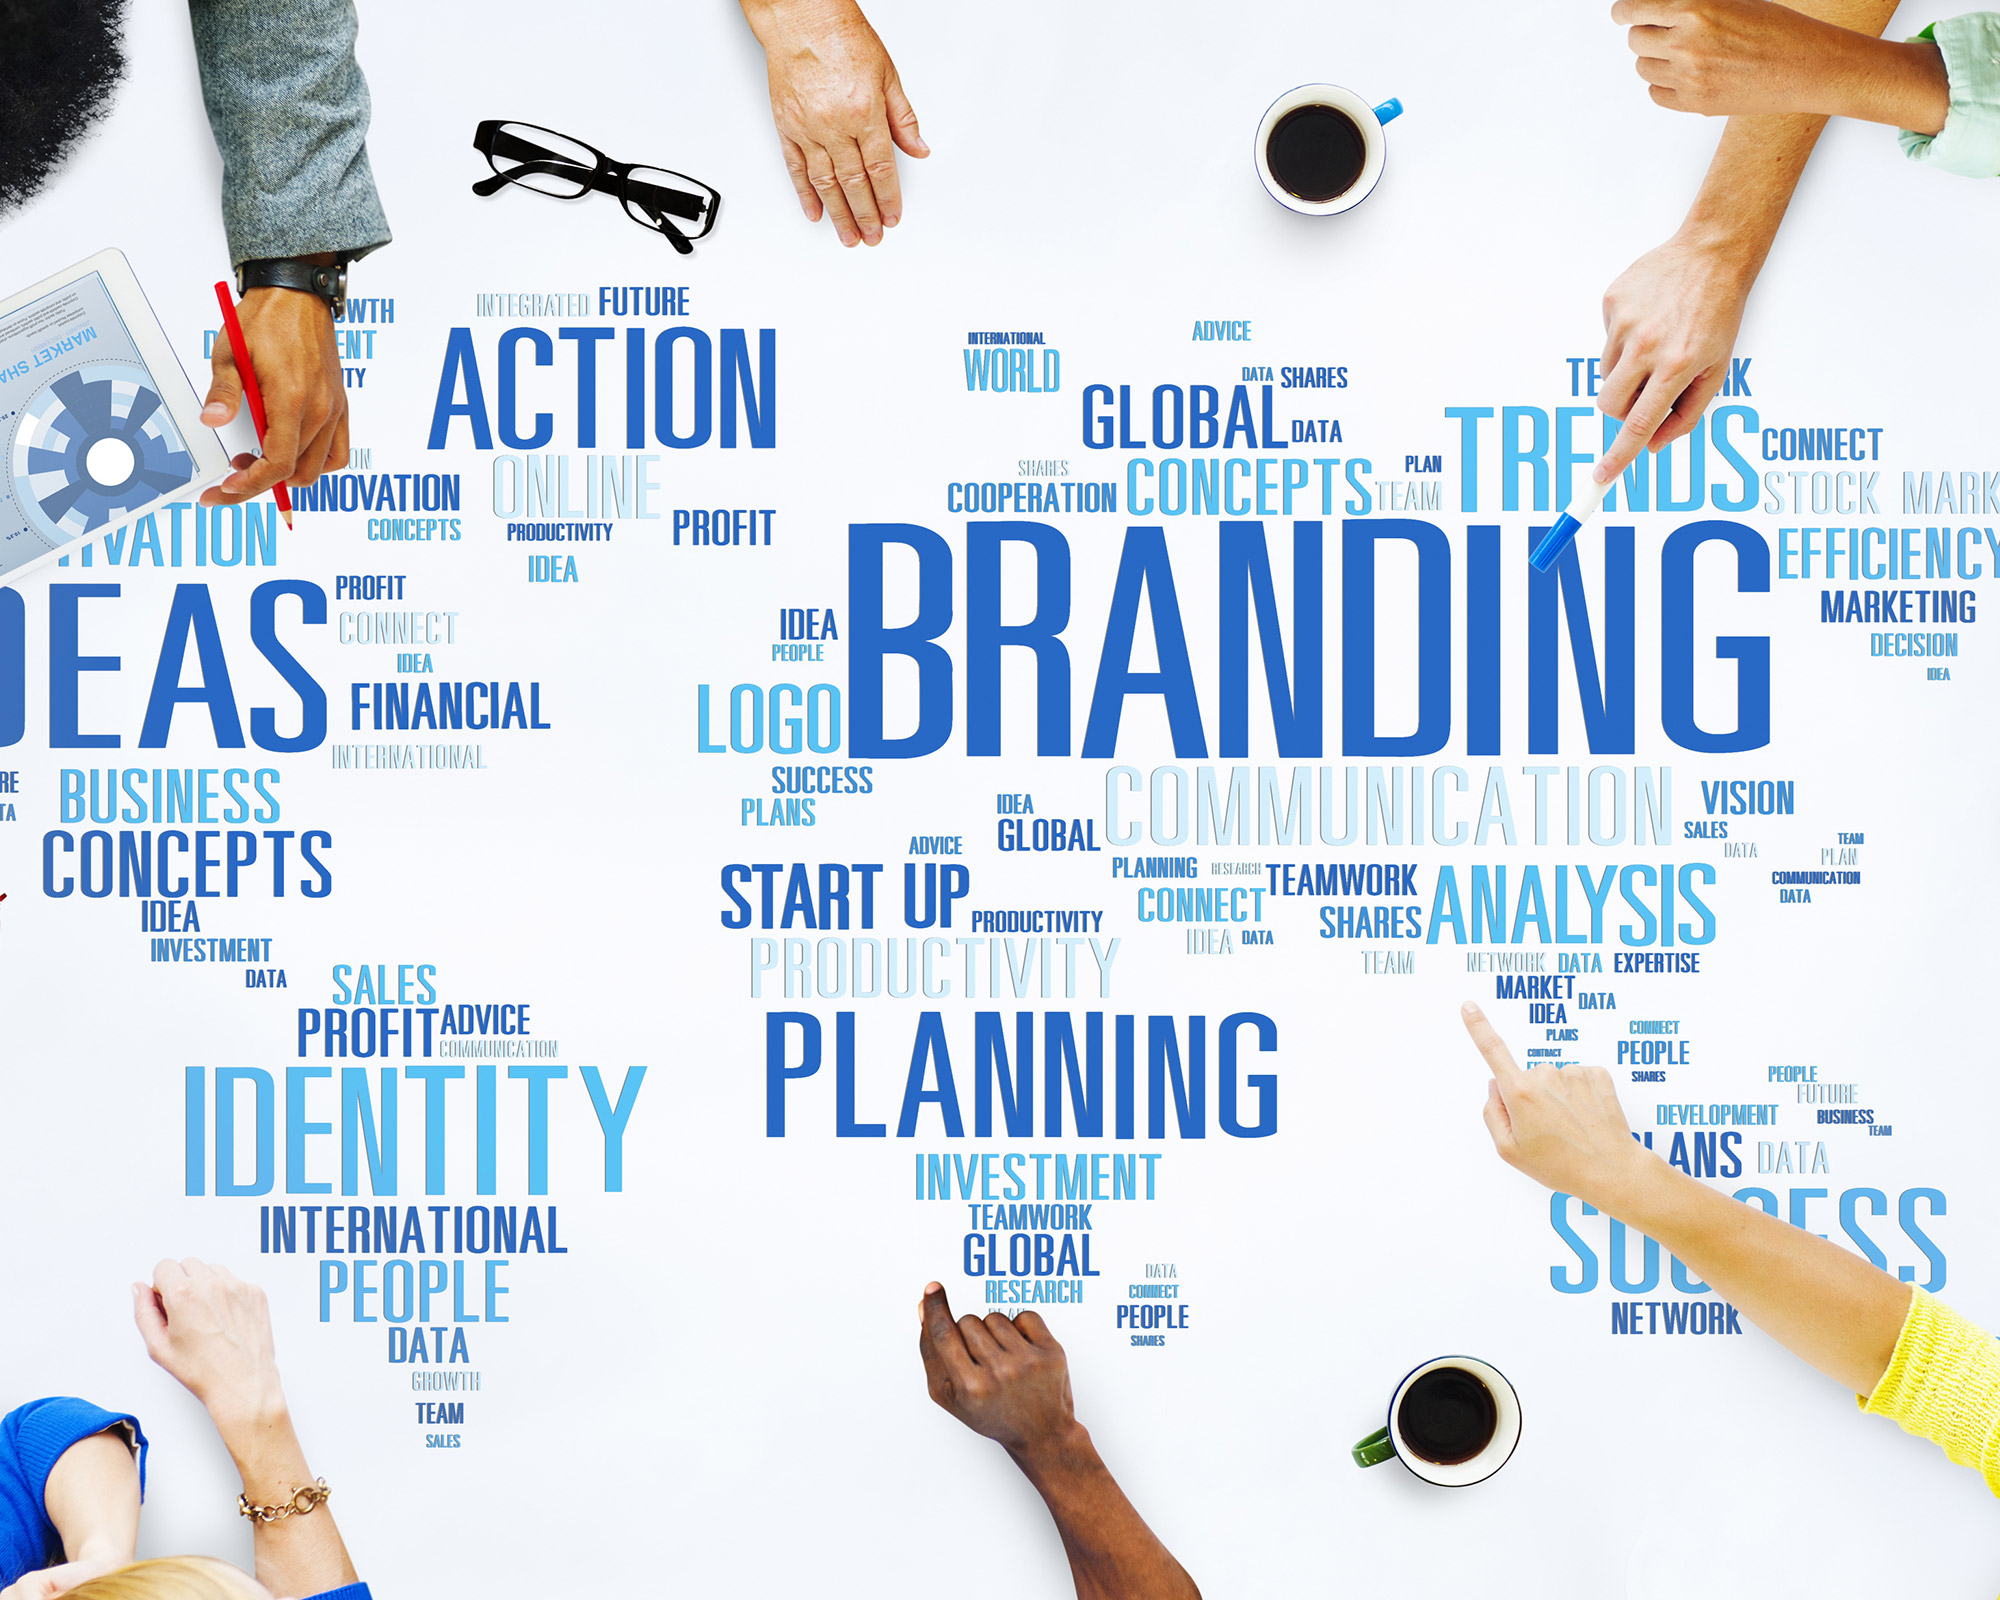 Core Components of Branding